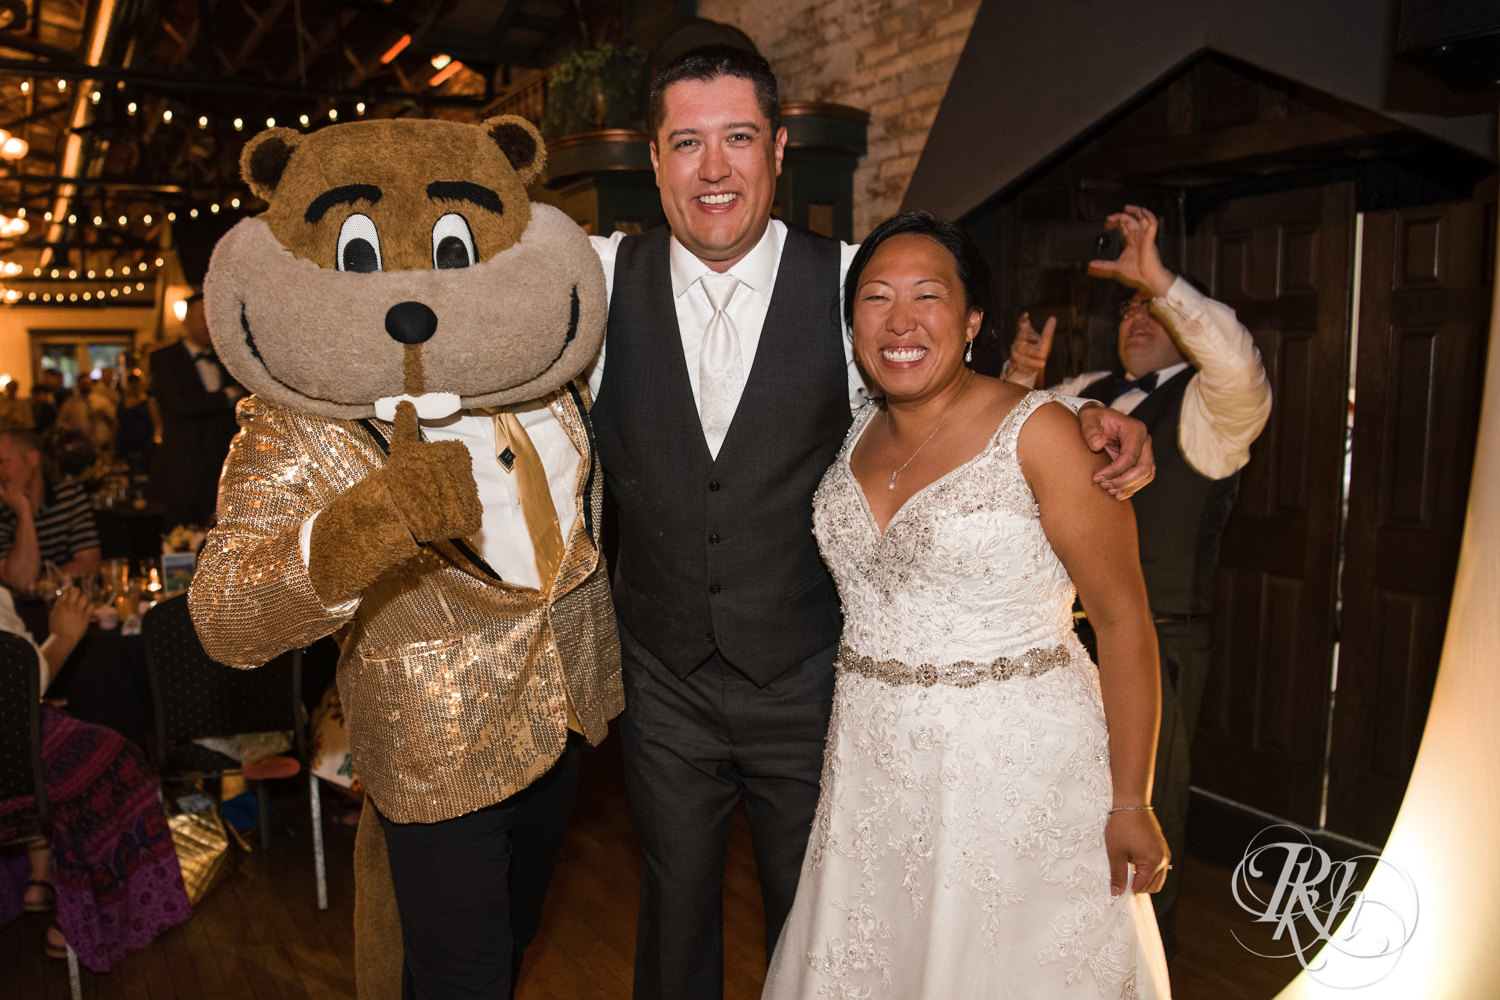 Goldy Gopher visits wedding reception at Kellerman's Event Center in White Bear Lake, Minnesota.